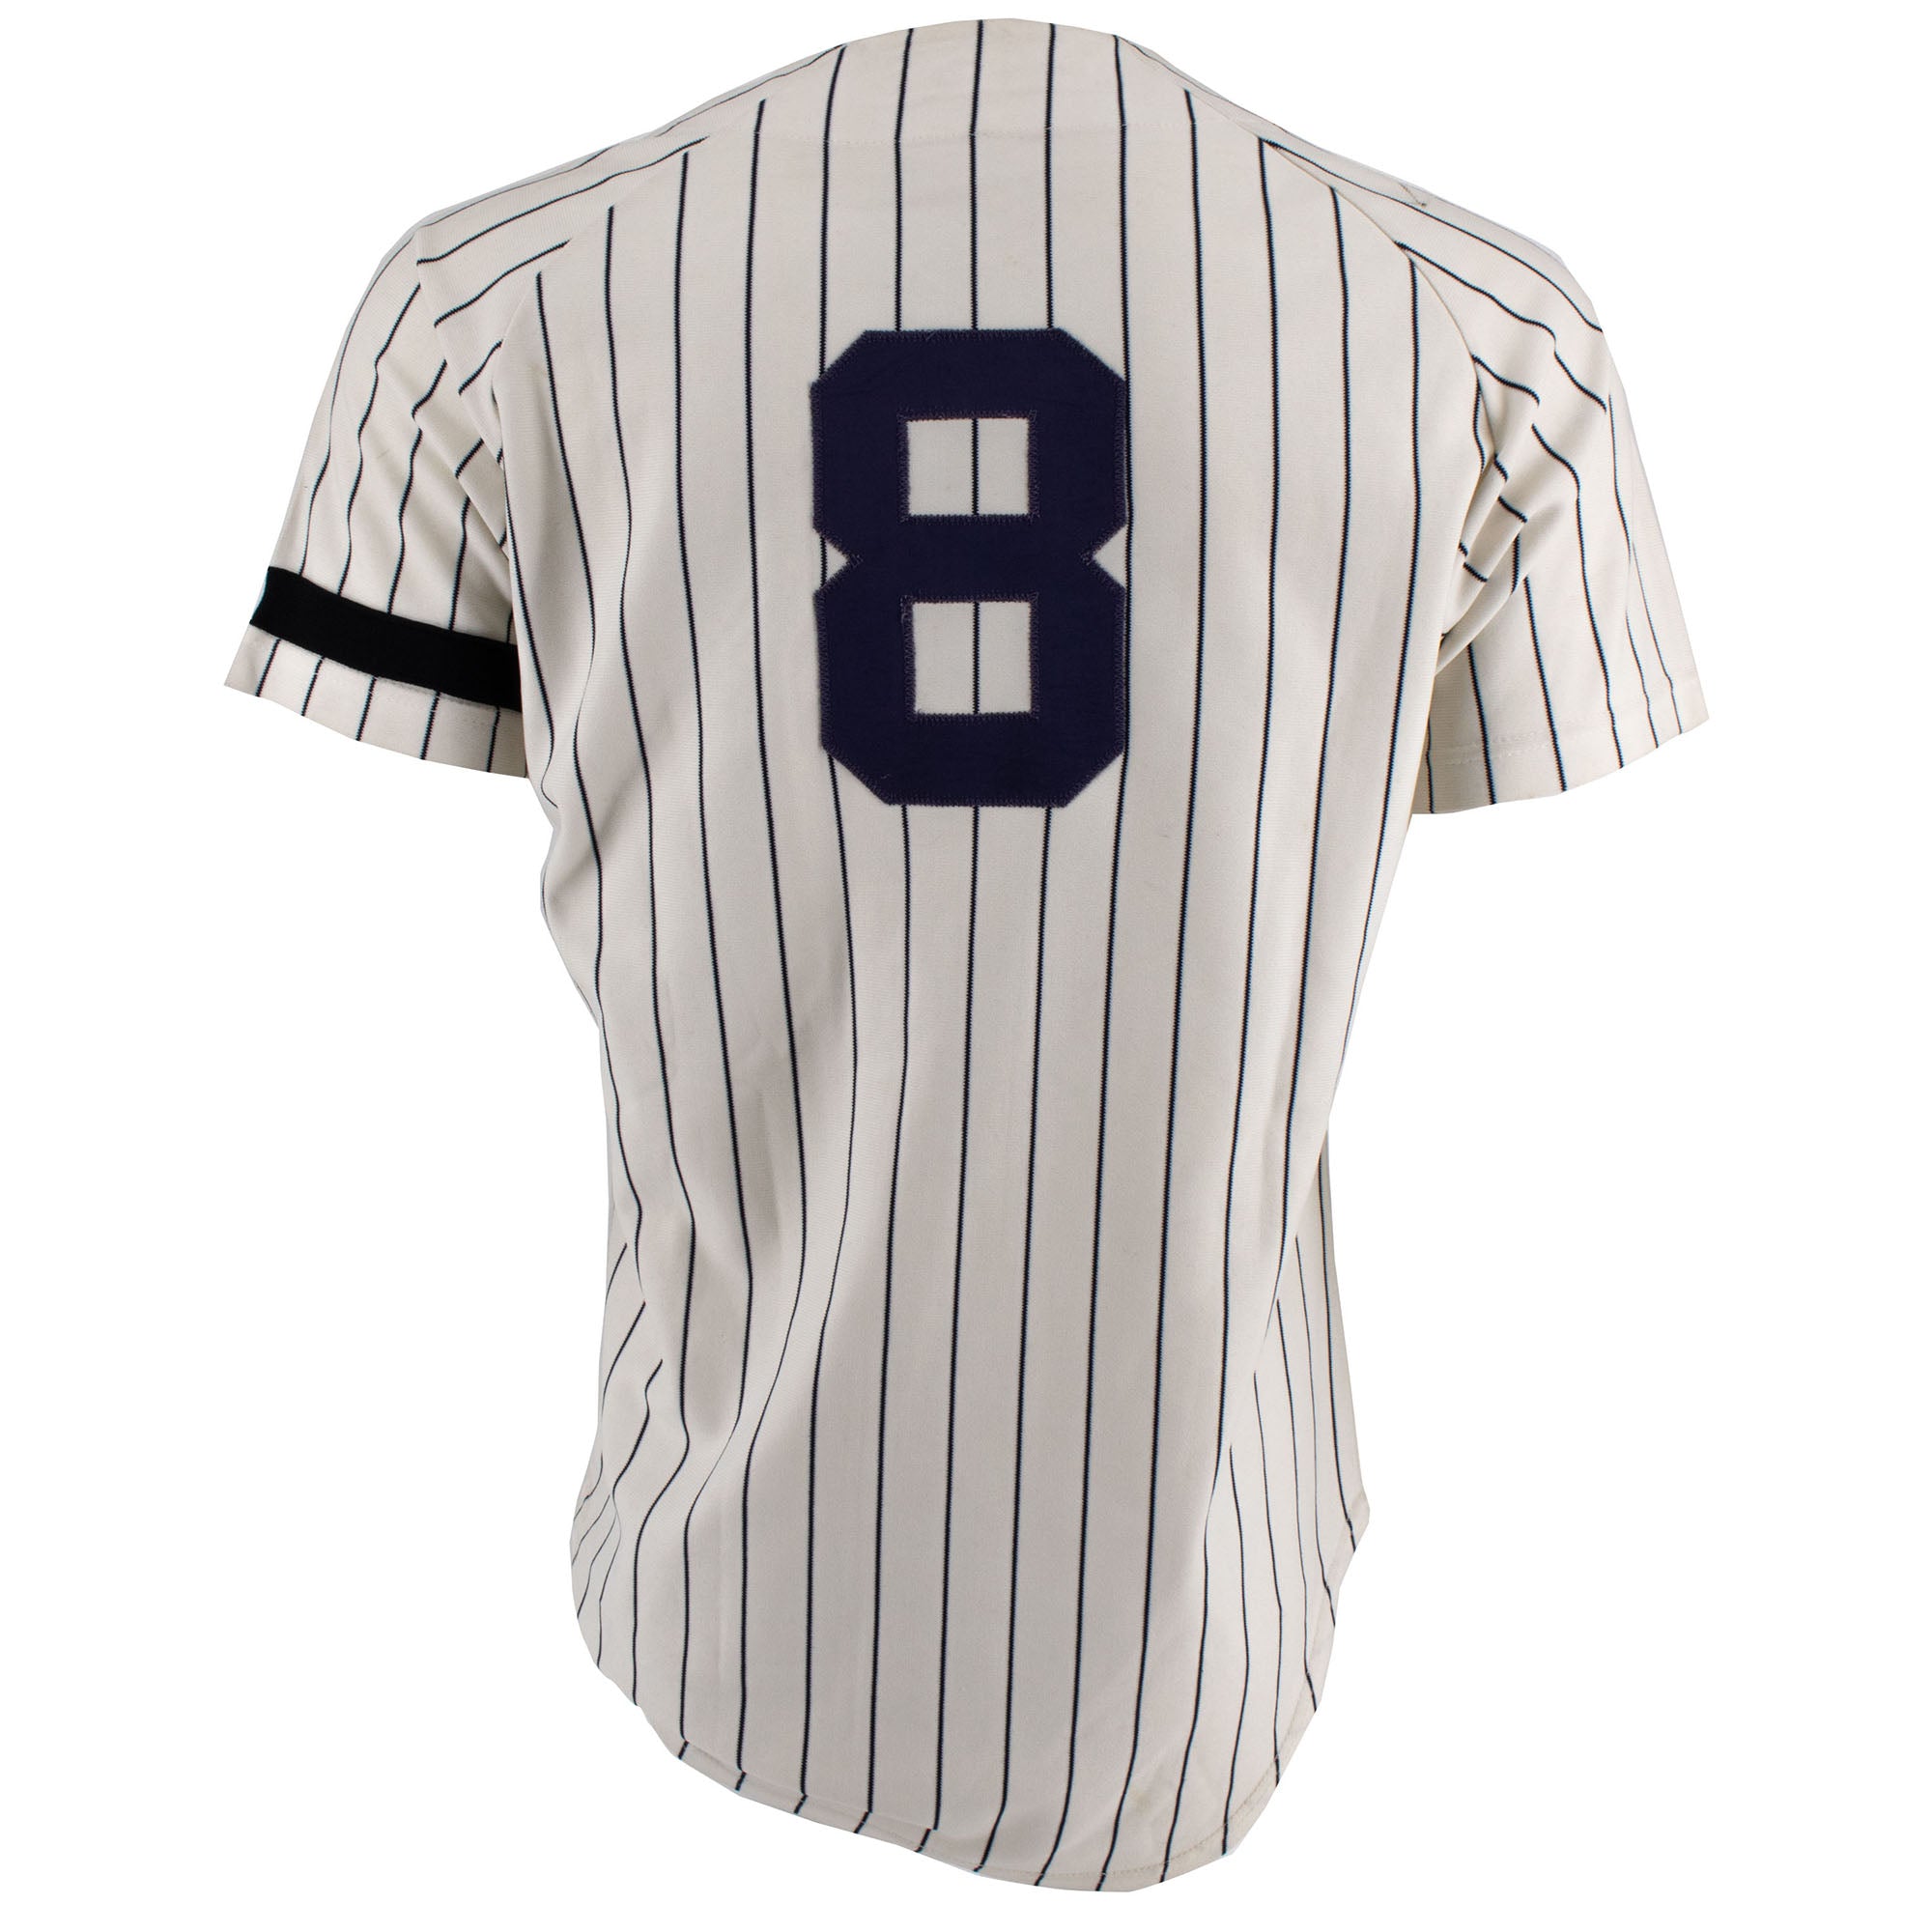 Yogi Berra 1978 NY Yankees Coaches Game Worn Jersey